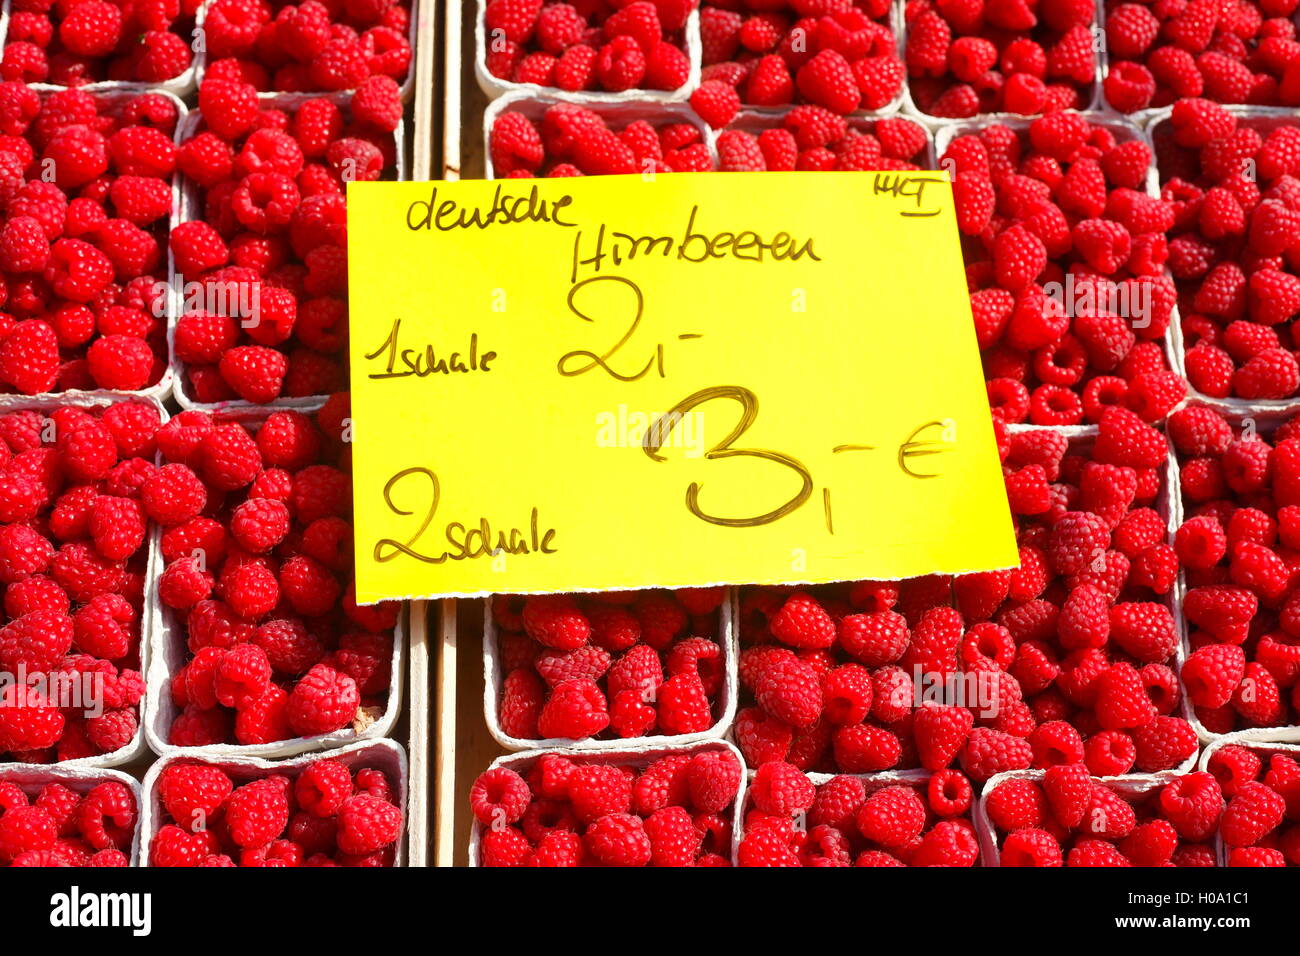 En Schalen Frische Himbeeren auf einem Marktstand, Bremen, Alemania, Europa Foto de stock